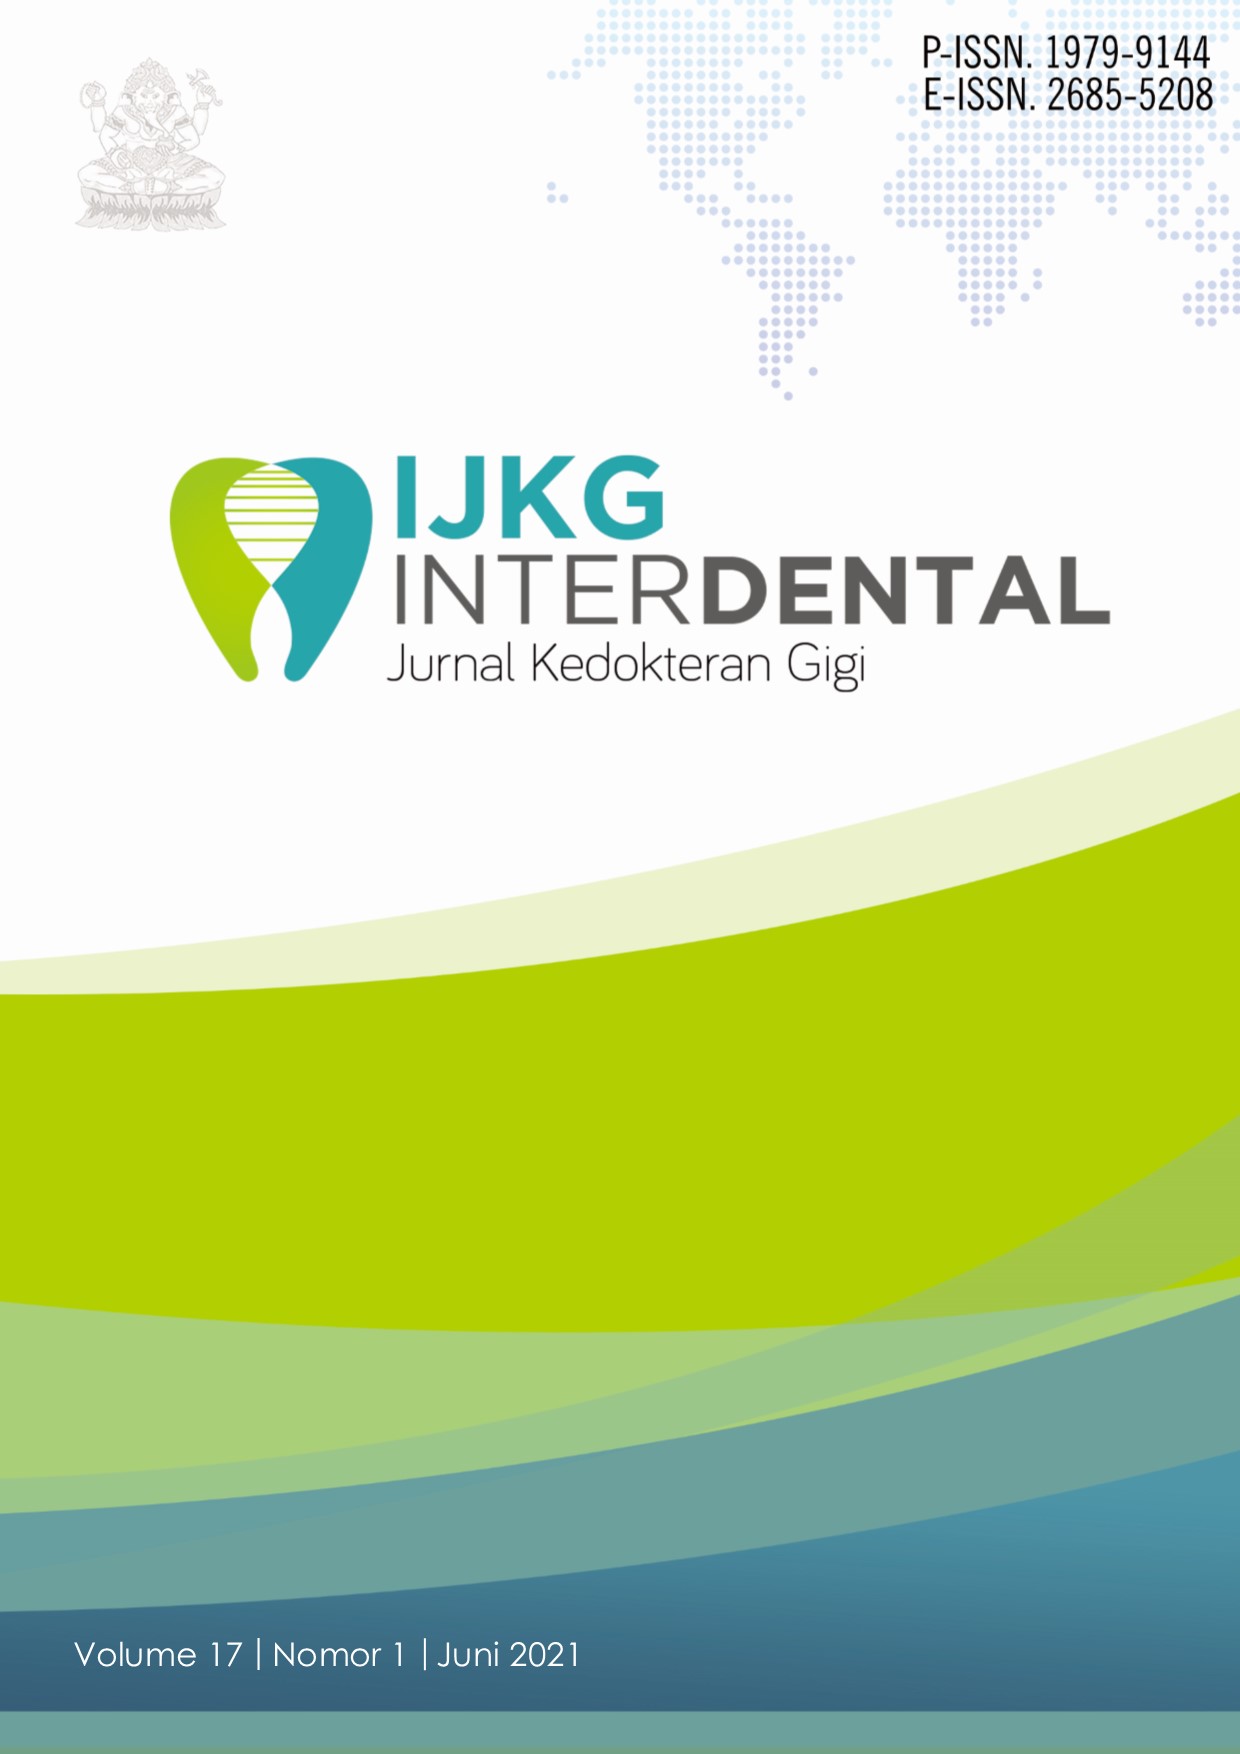 					View Vol. 17 No. 1 (2021): Interdental Jurnal Kedokteran Gigi (IJKG)
				